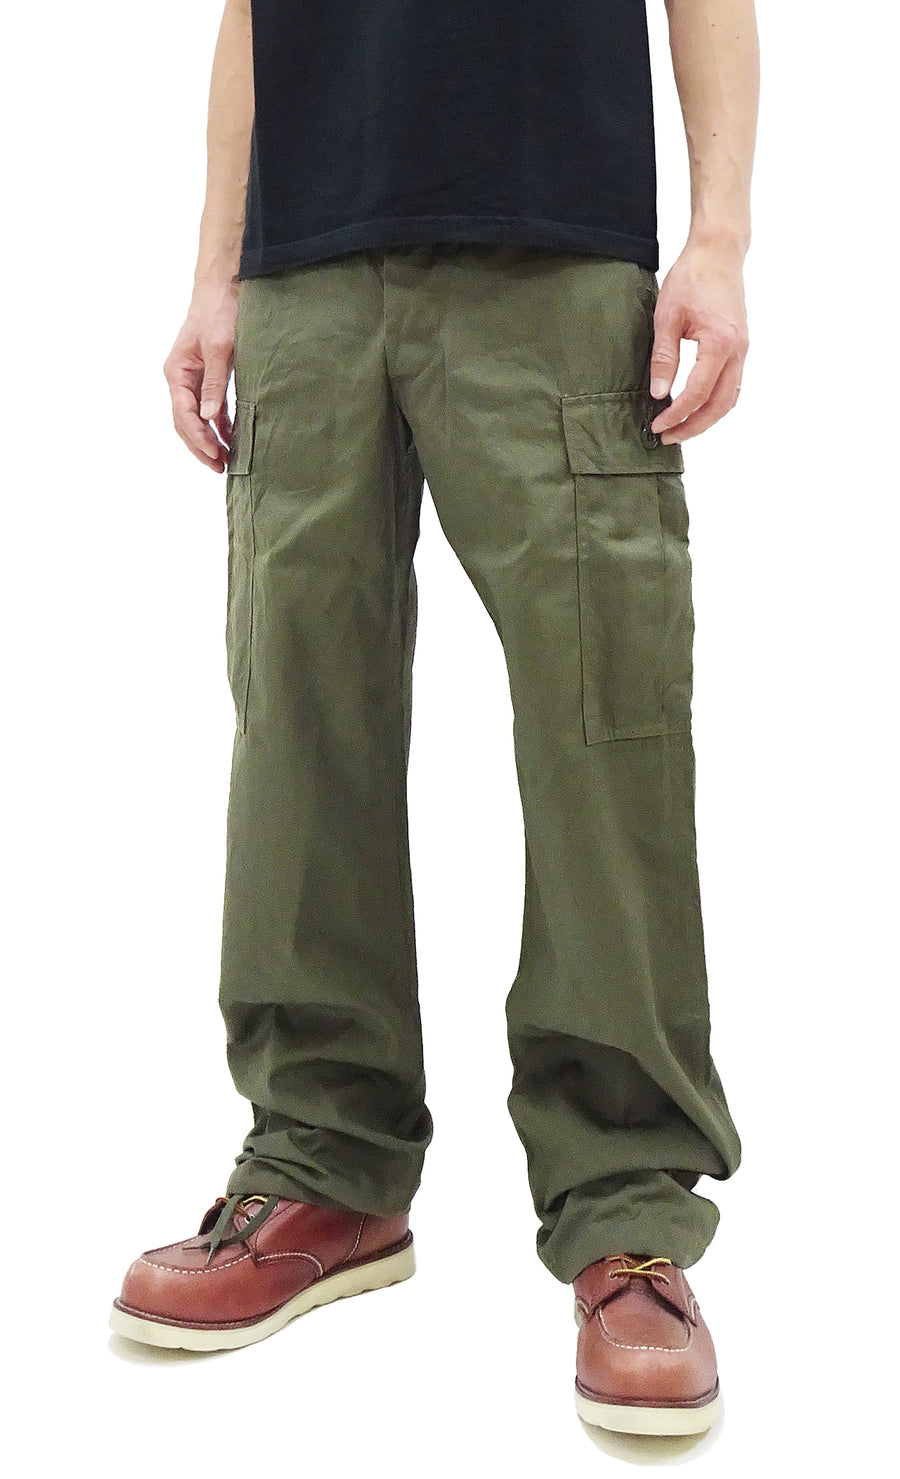 Buzz Rickson Cargo Pants Men's Reproduction of US Army